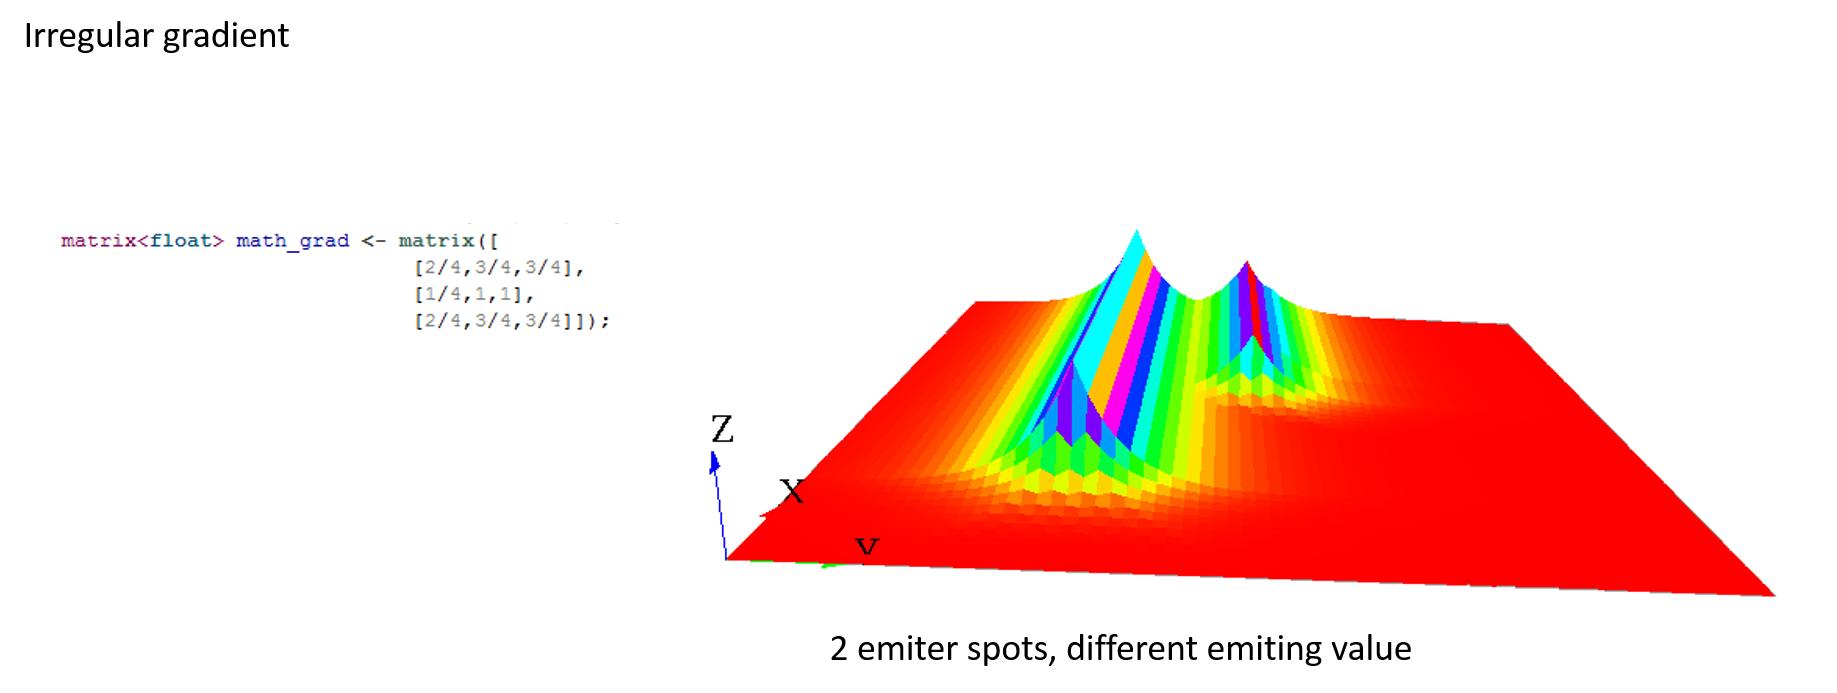 Examples of irregular gradient diffusions.